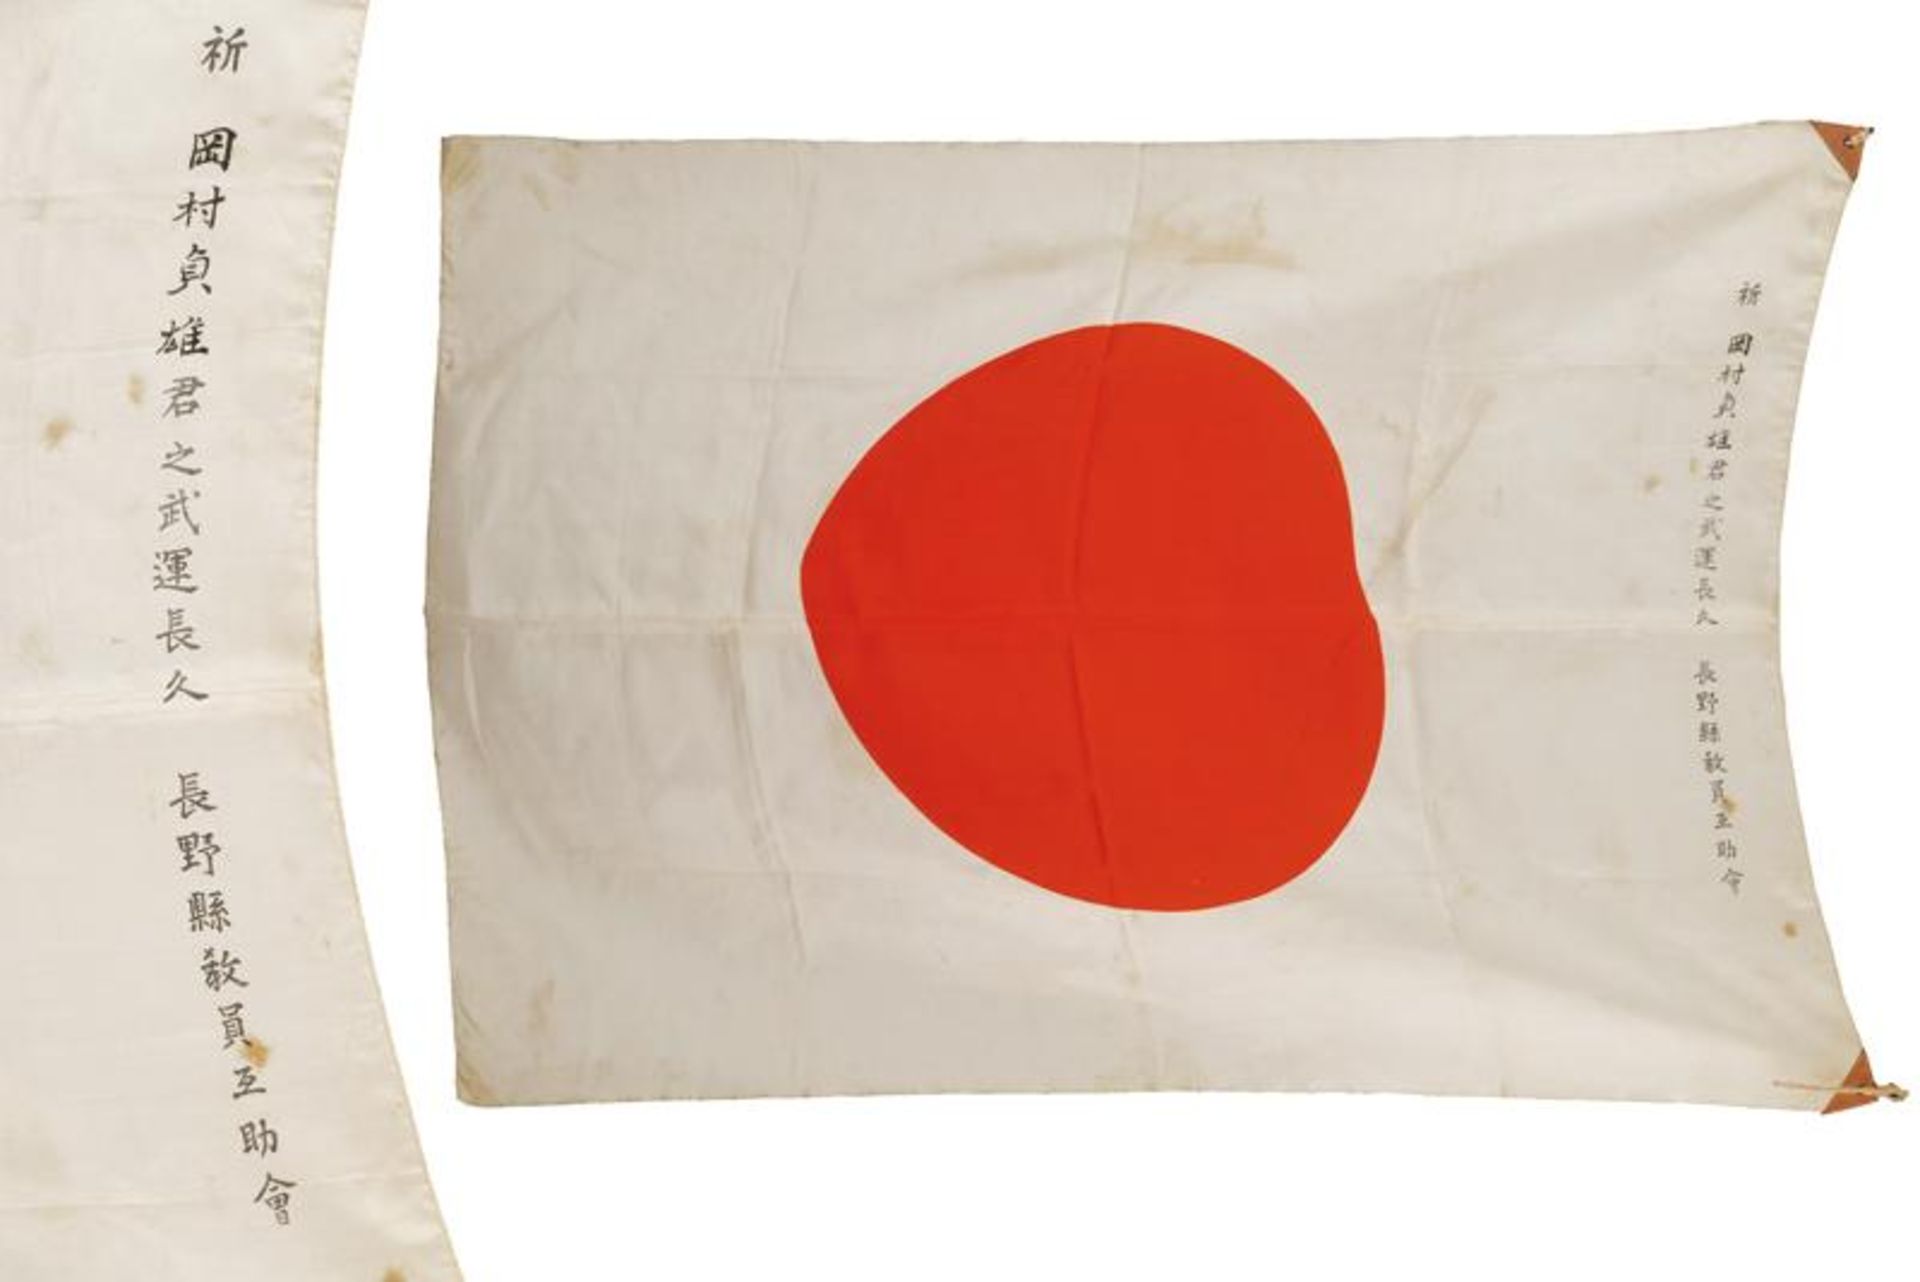 A Hinomaru flag